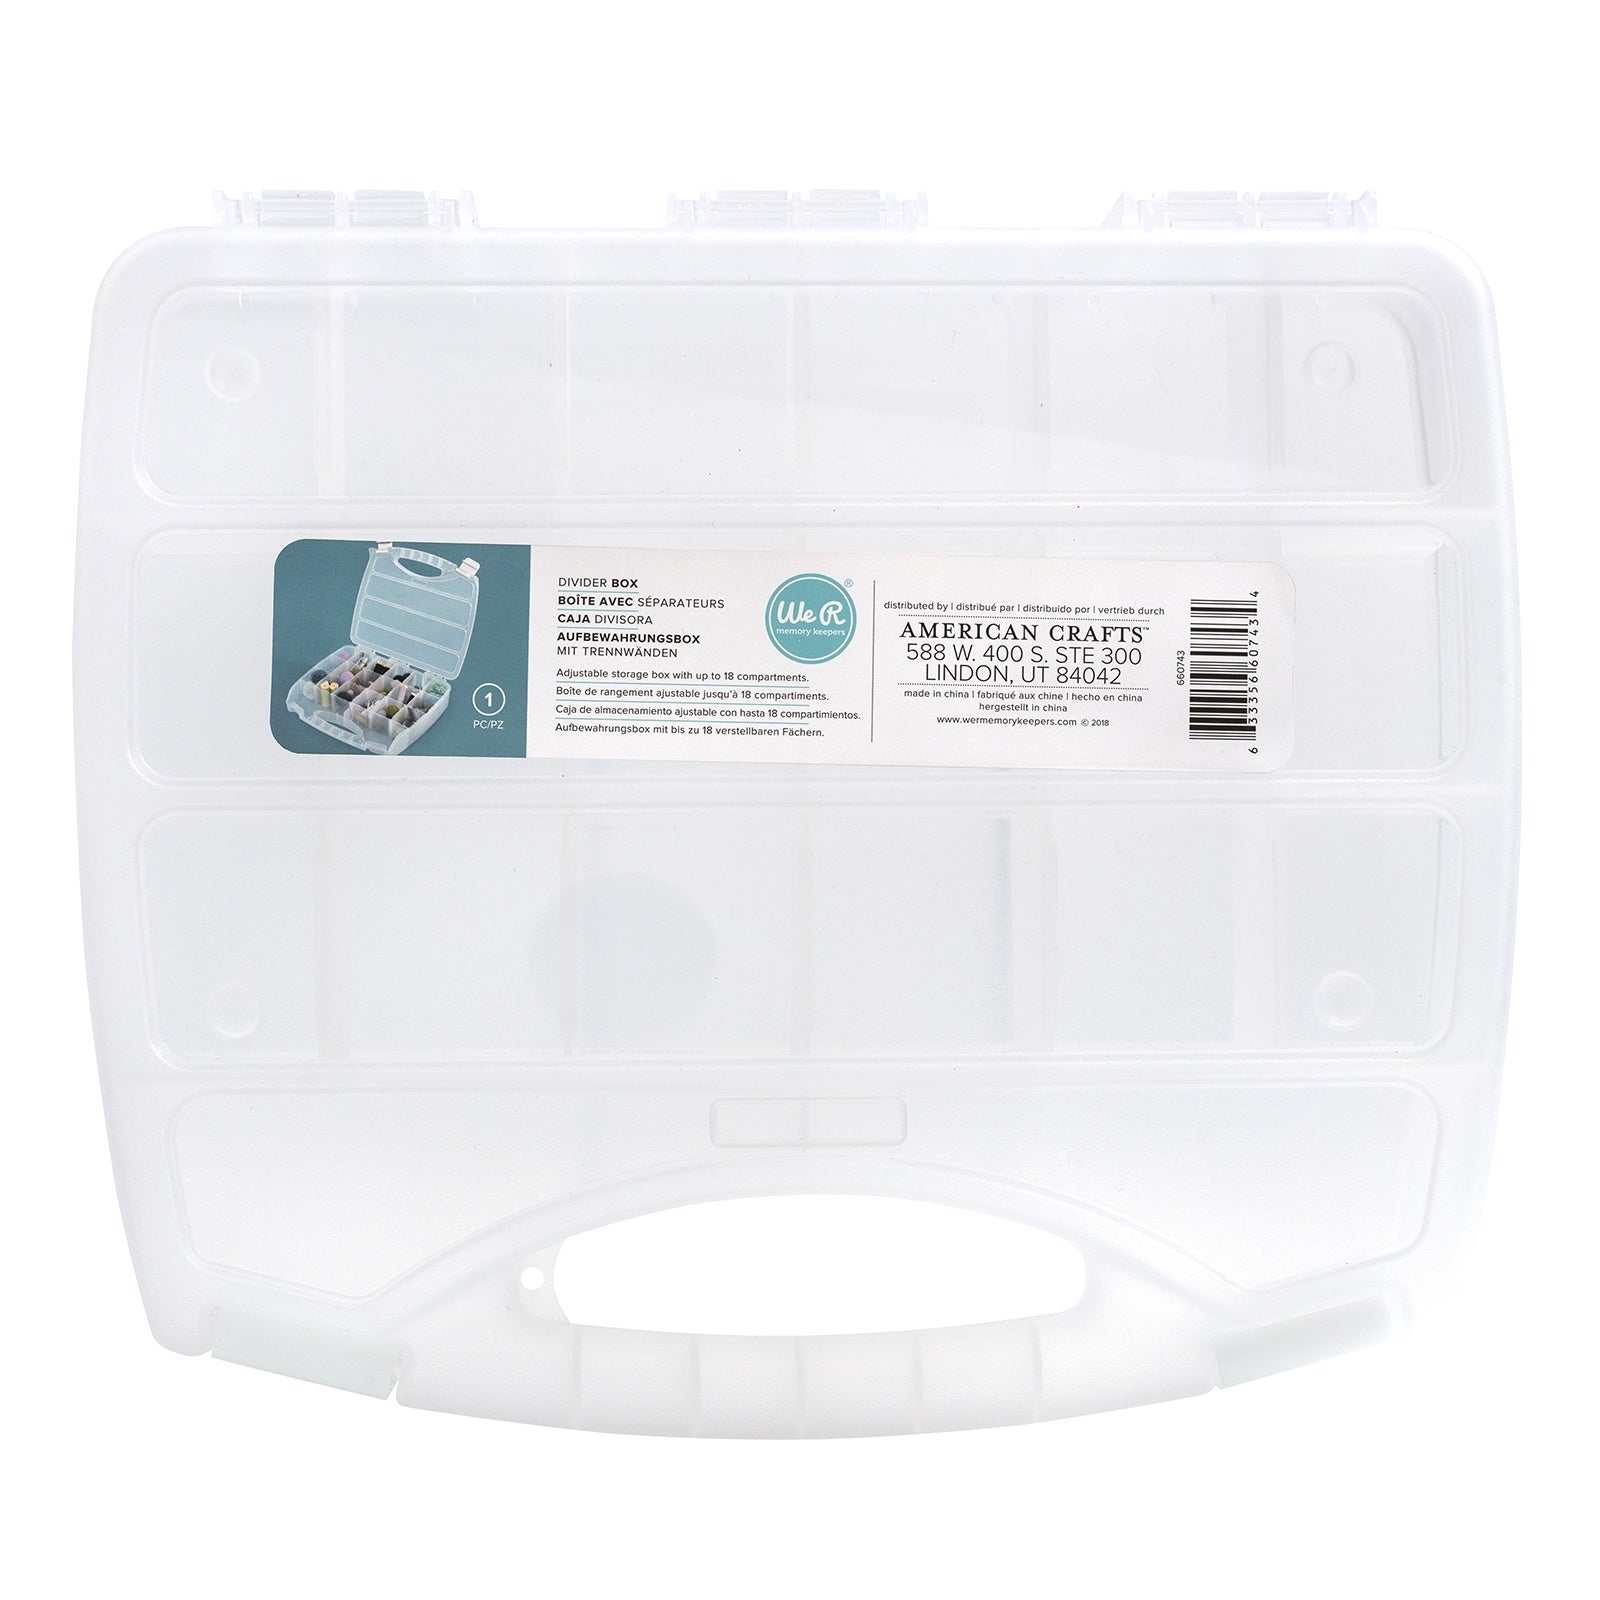 We R Divider Box Translucent Plastic Storage-12X10X2.4 Case